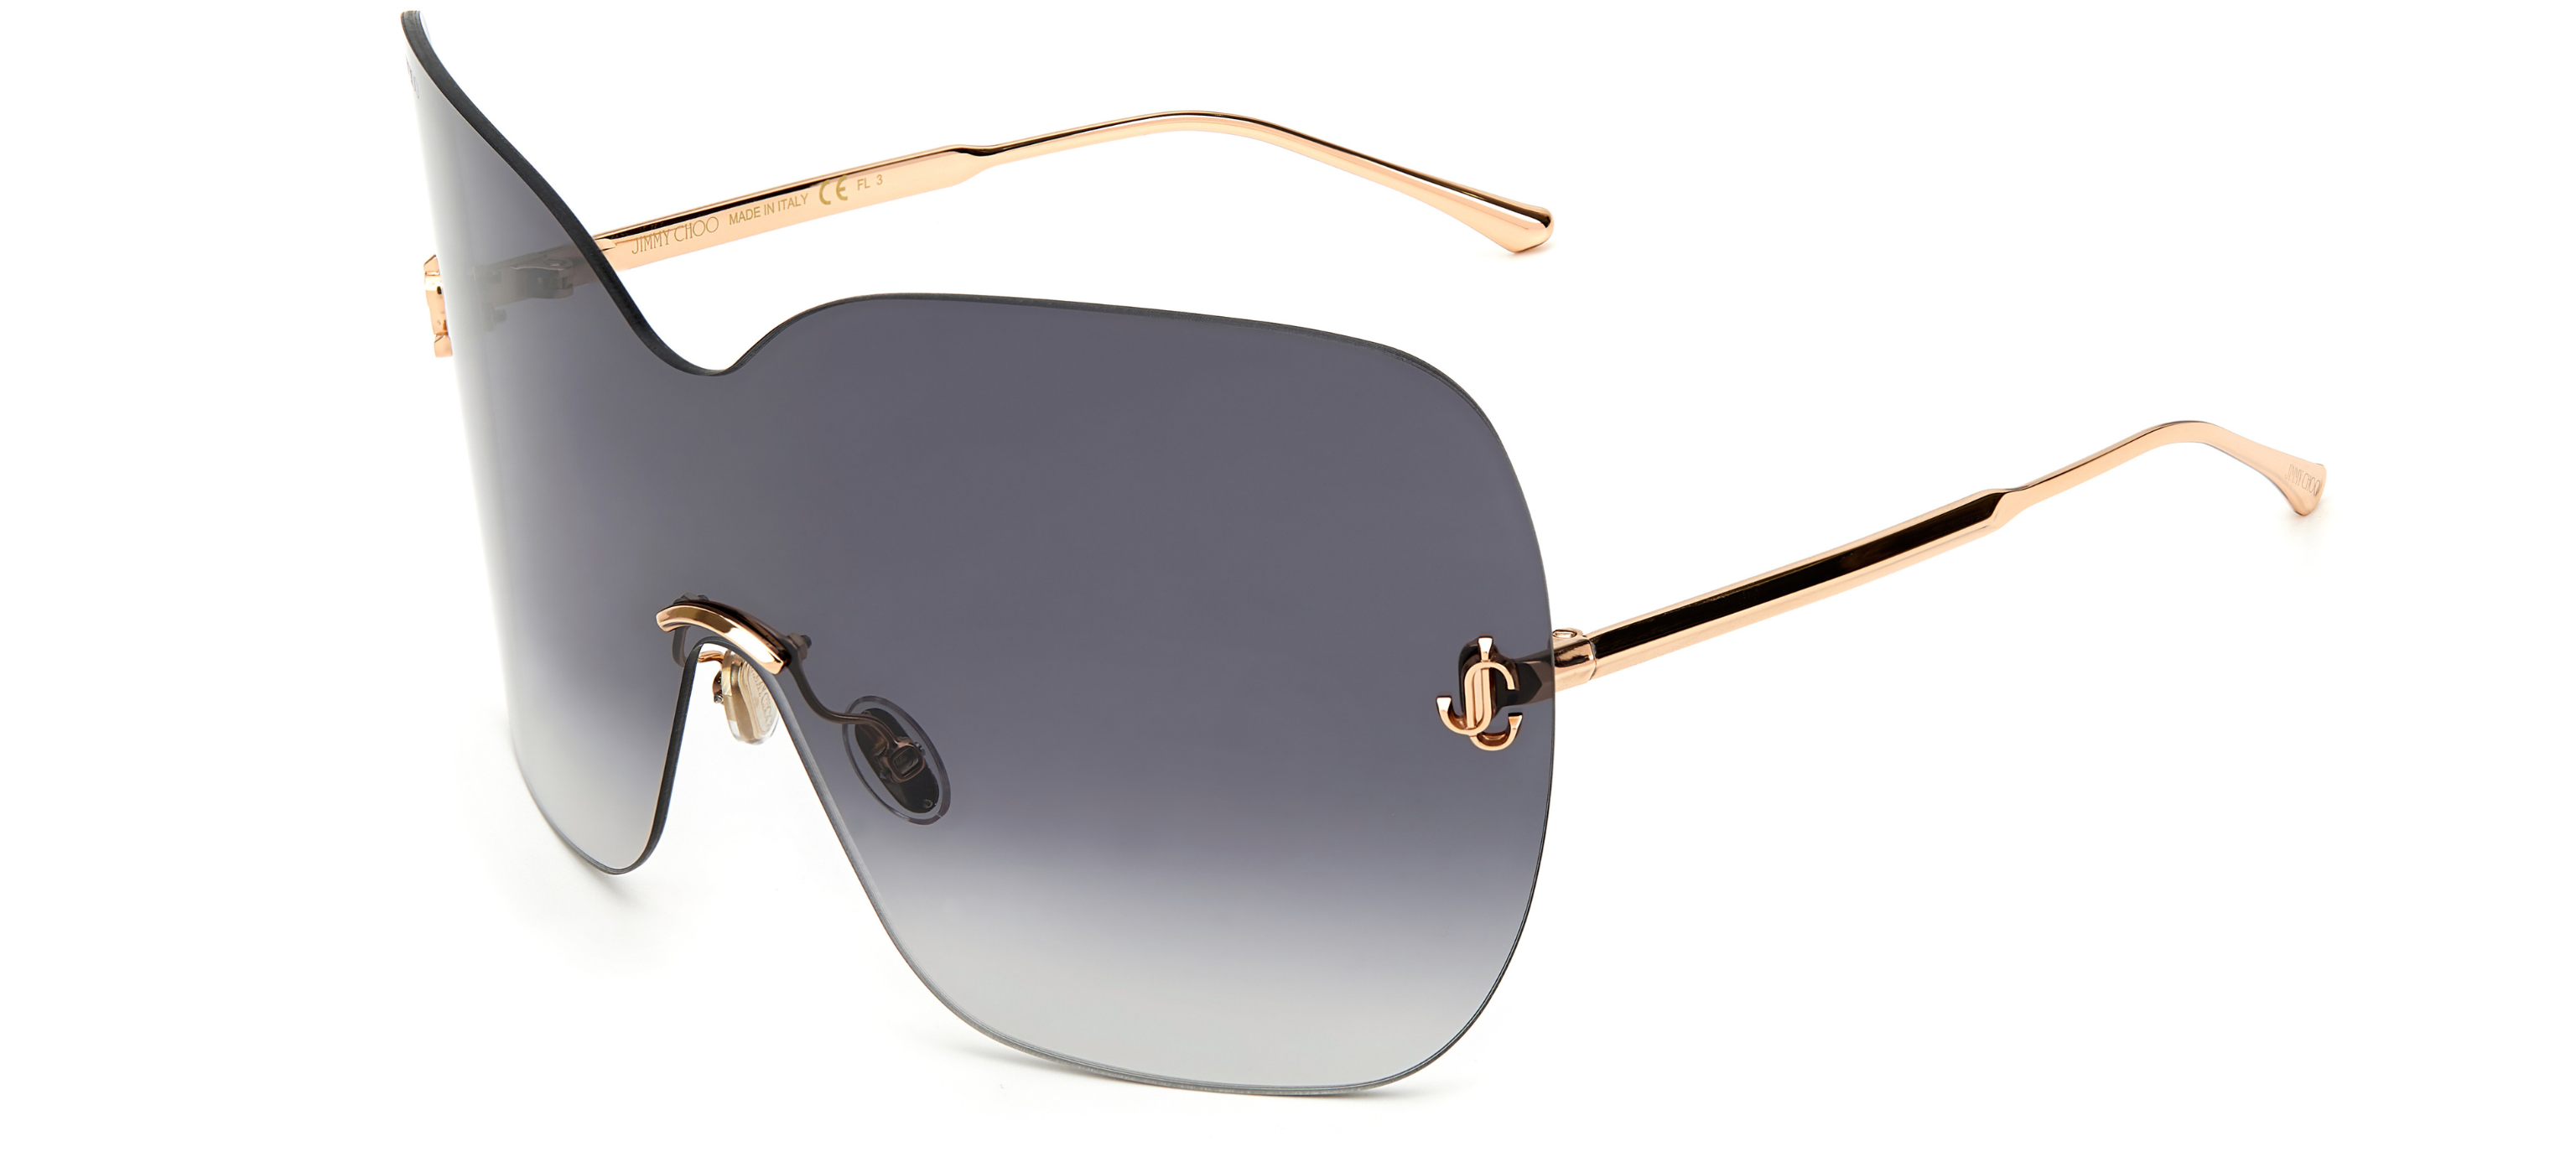 JImmy Choo Sunglass - Buy Jimmy Choo Sunglasses for Men & Women | Dayal ...